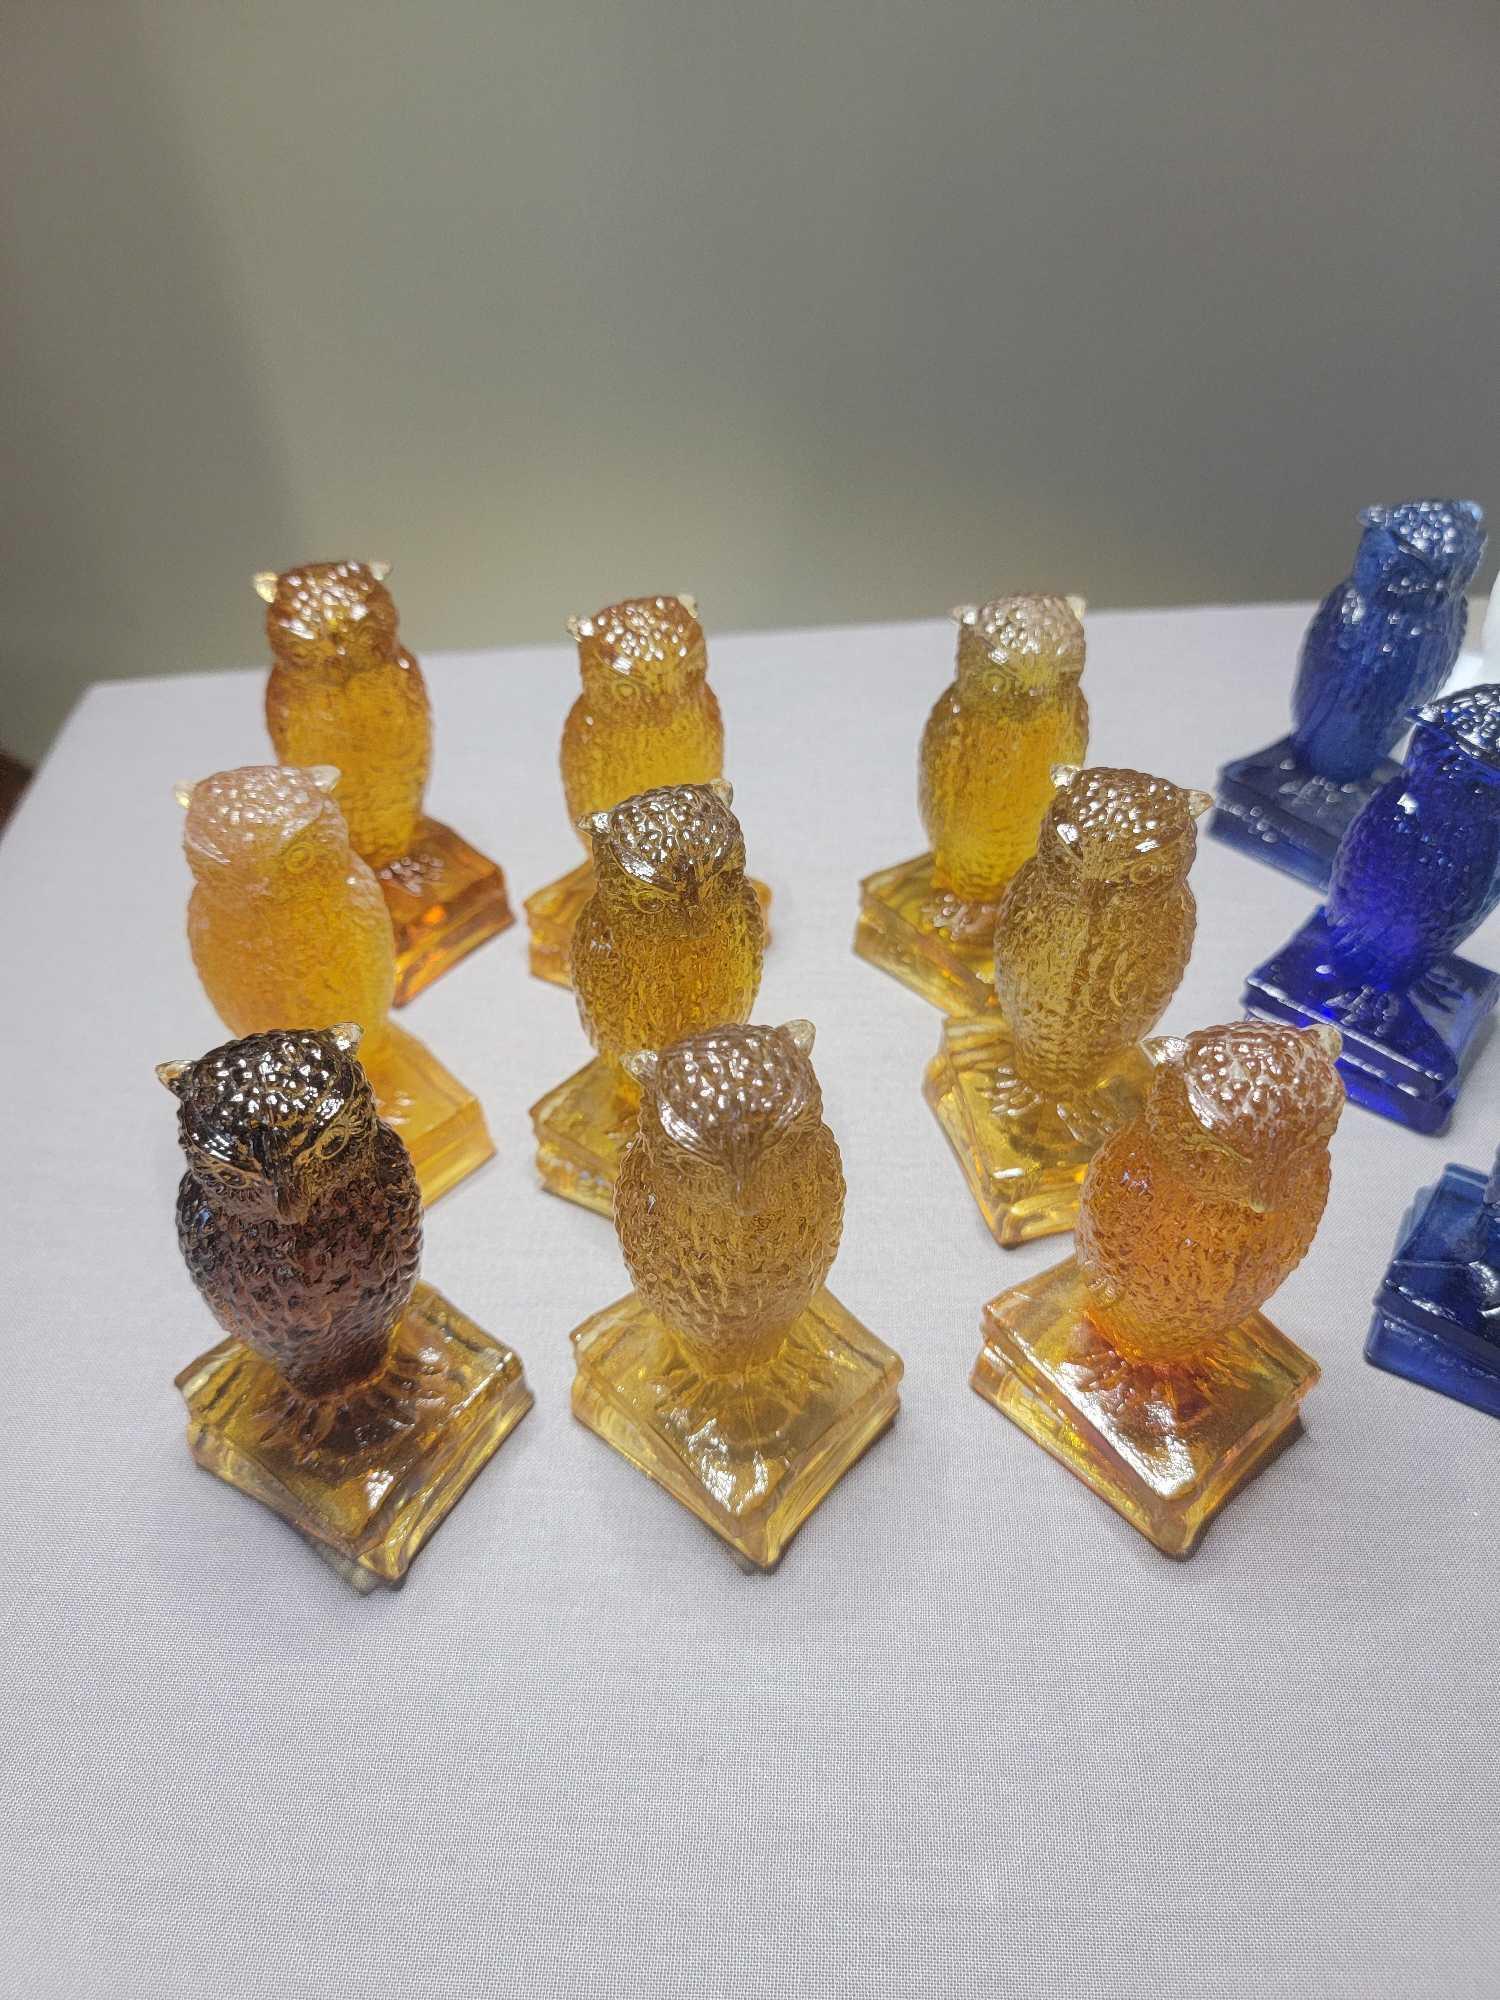 54 Degenhart Glass Owls on Books 8 different colors